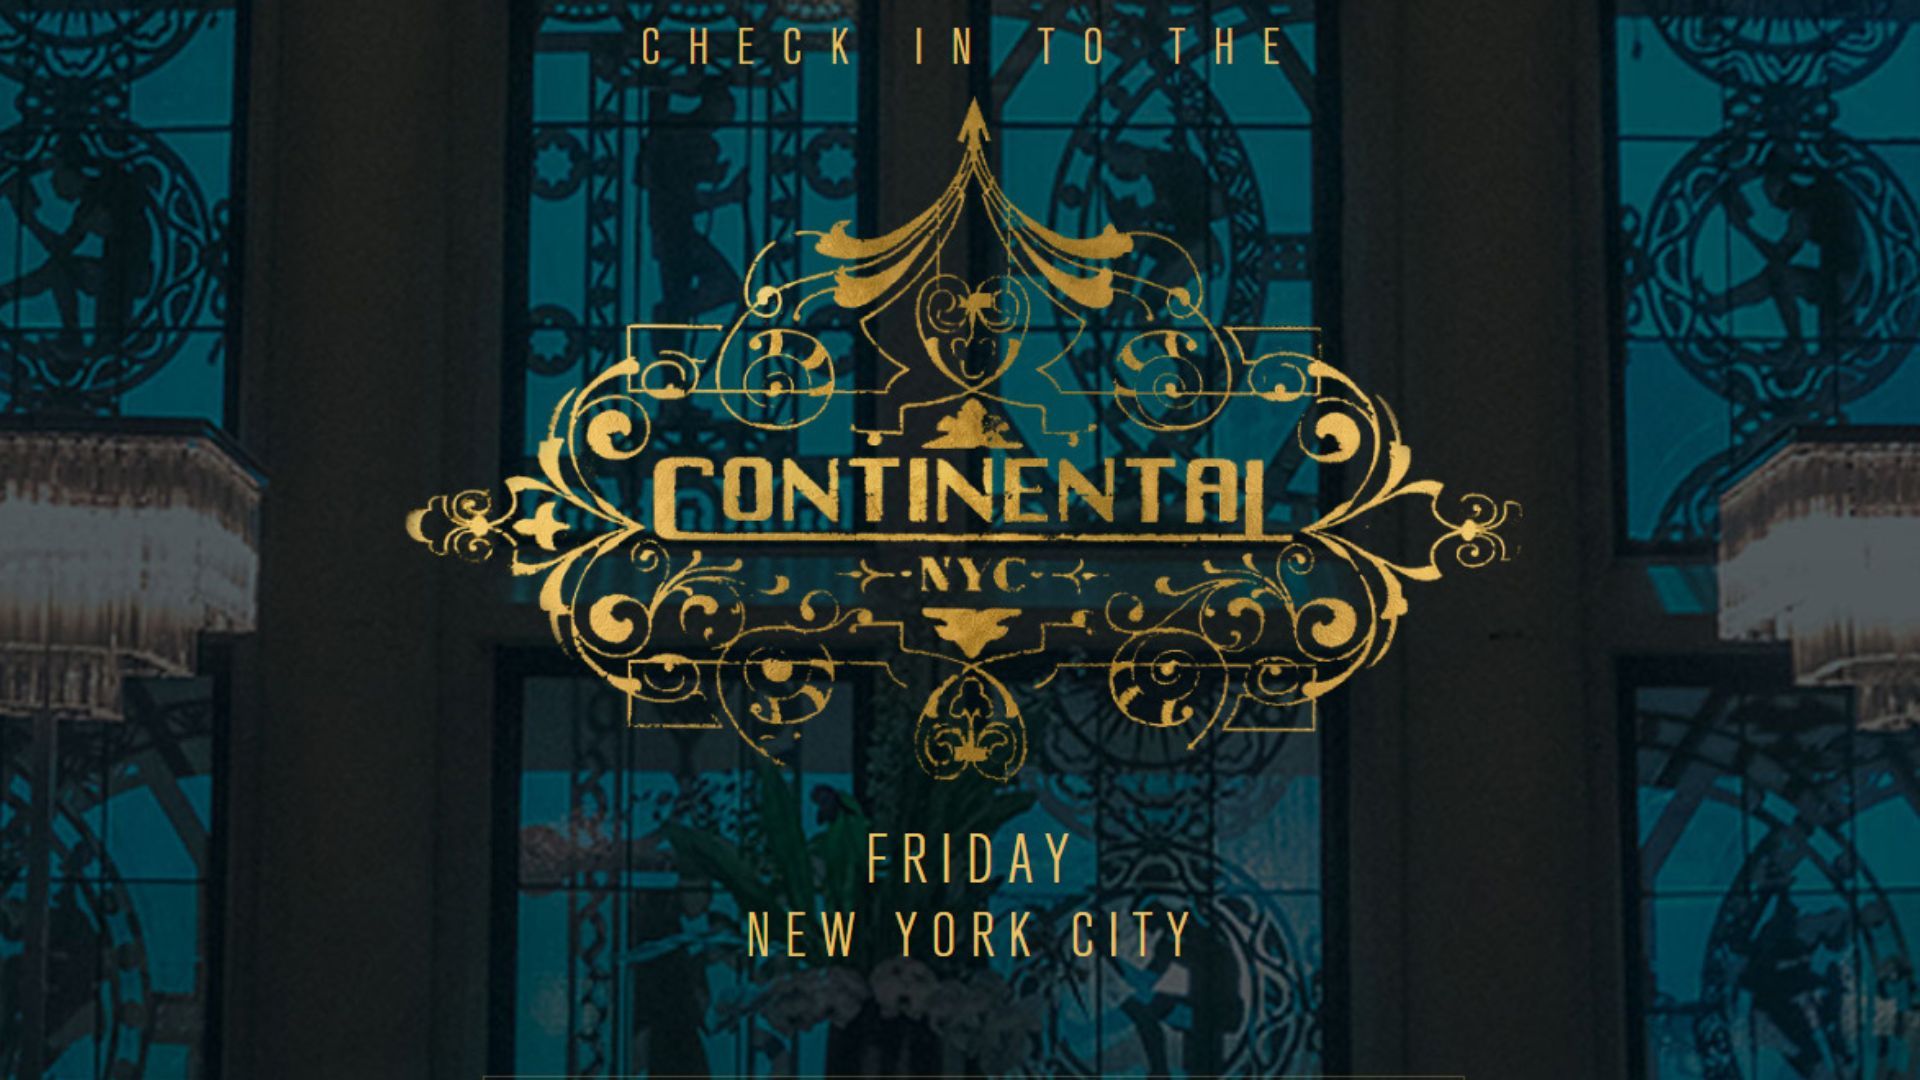 The Continental: From the World of John Wick (TV Mini Series 2023) - IMDb